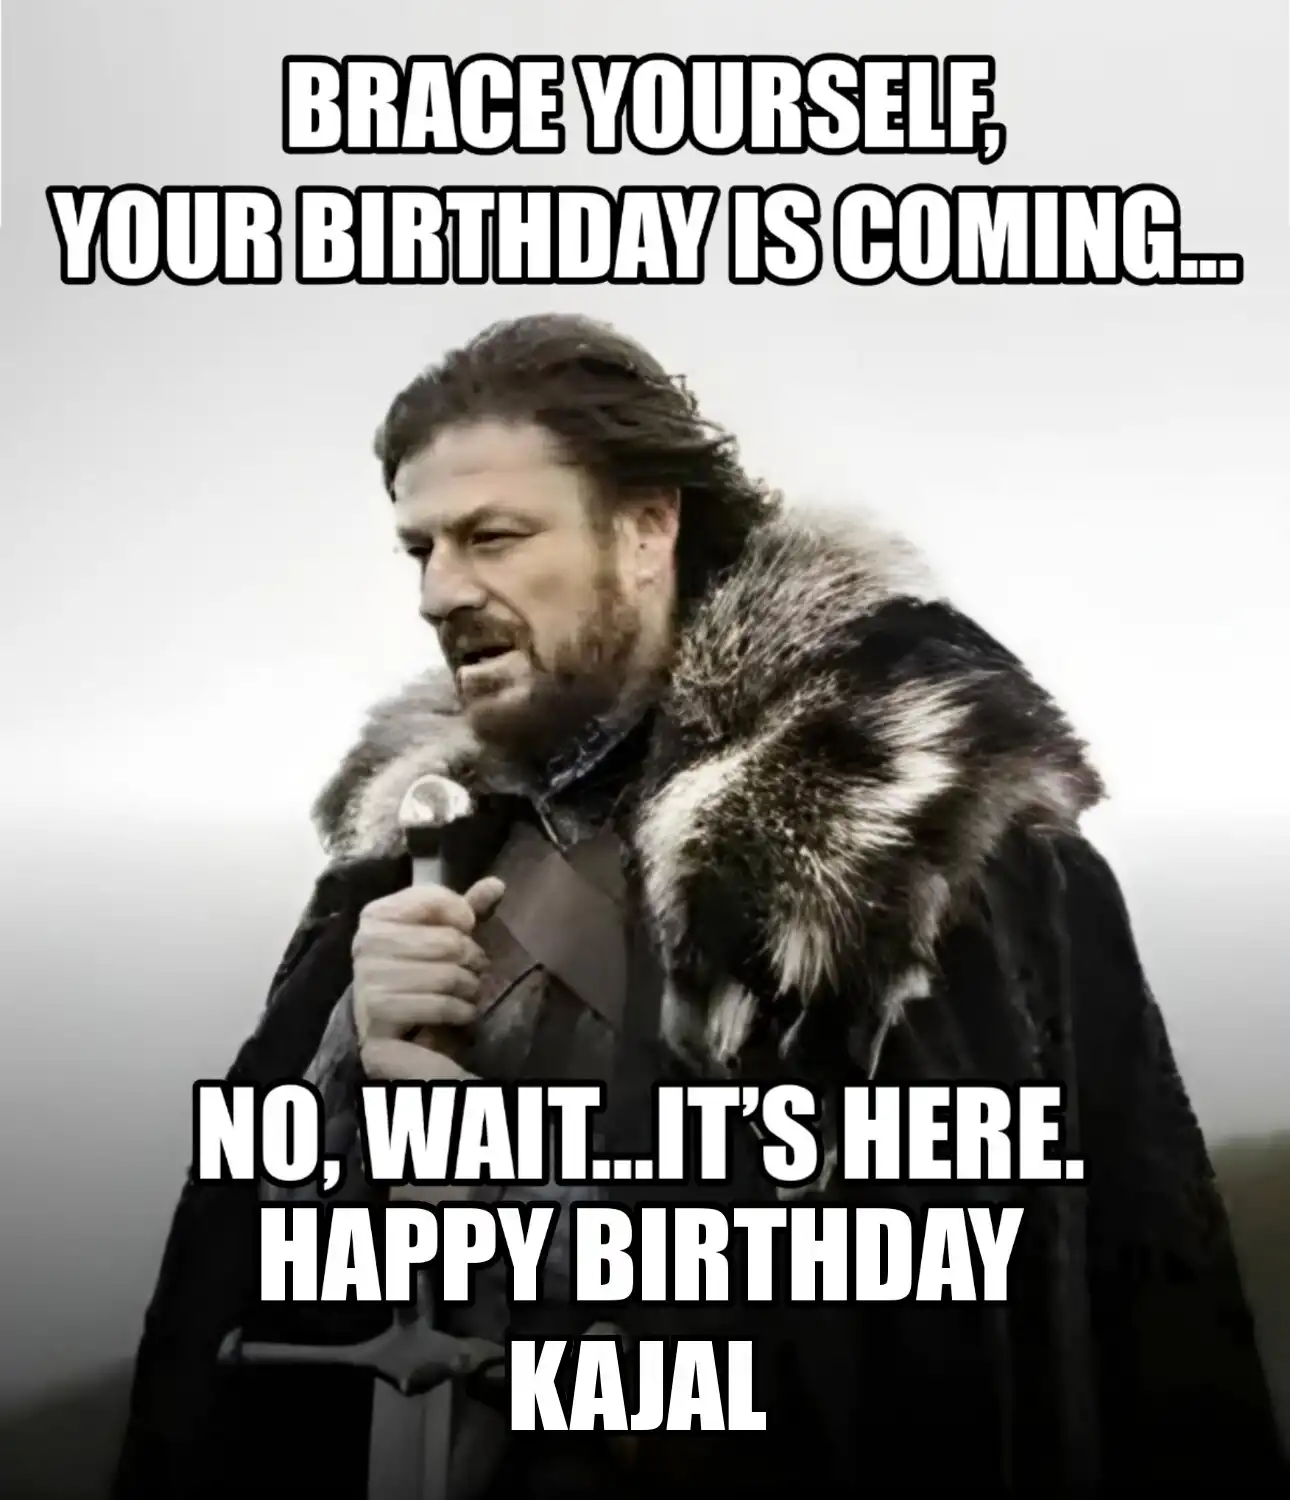 Happy Birthday Kajal Brace Yourself Your Birthday Is Coming Meme